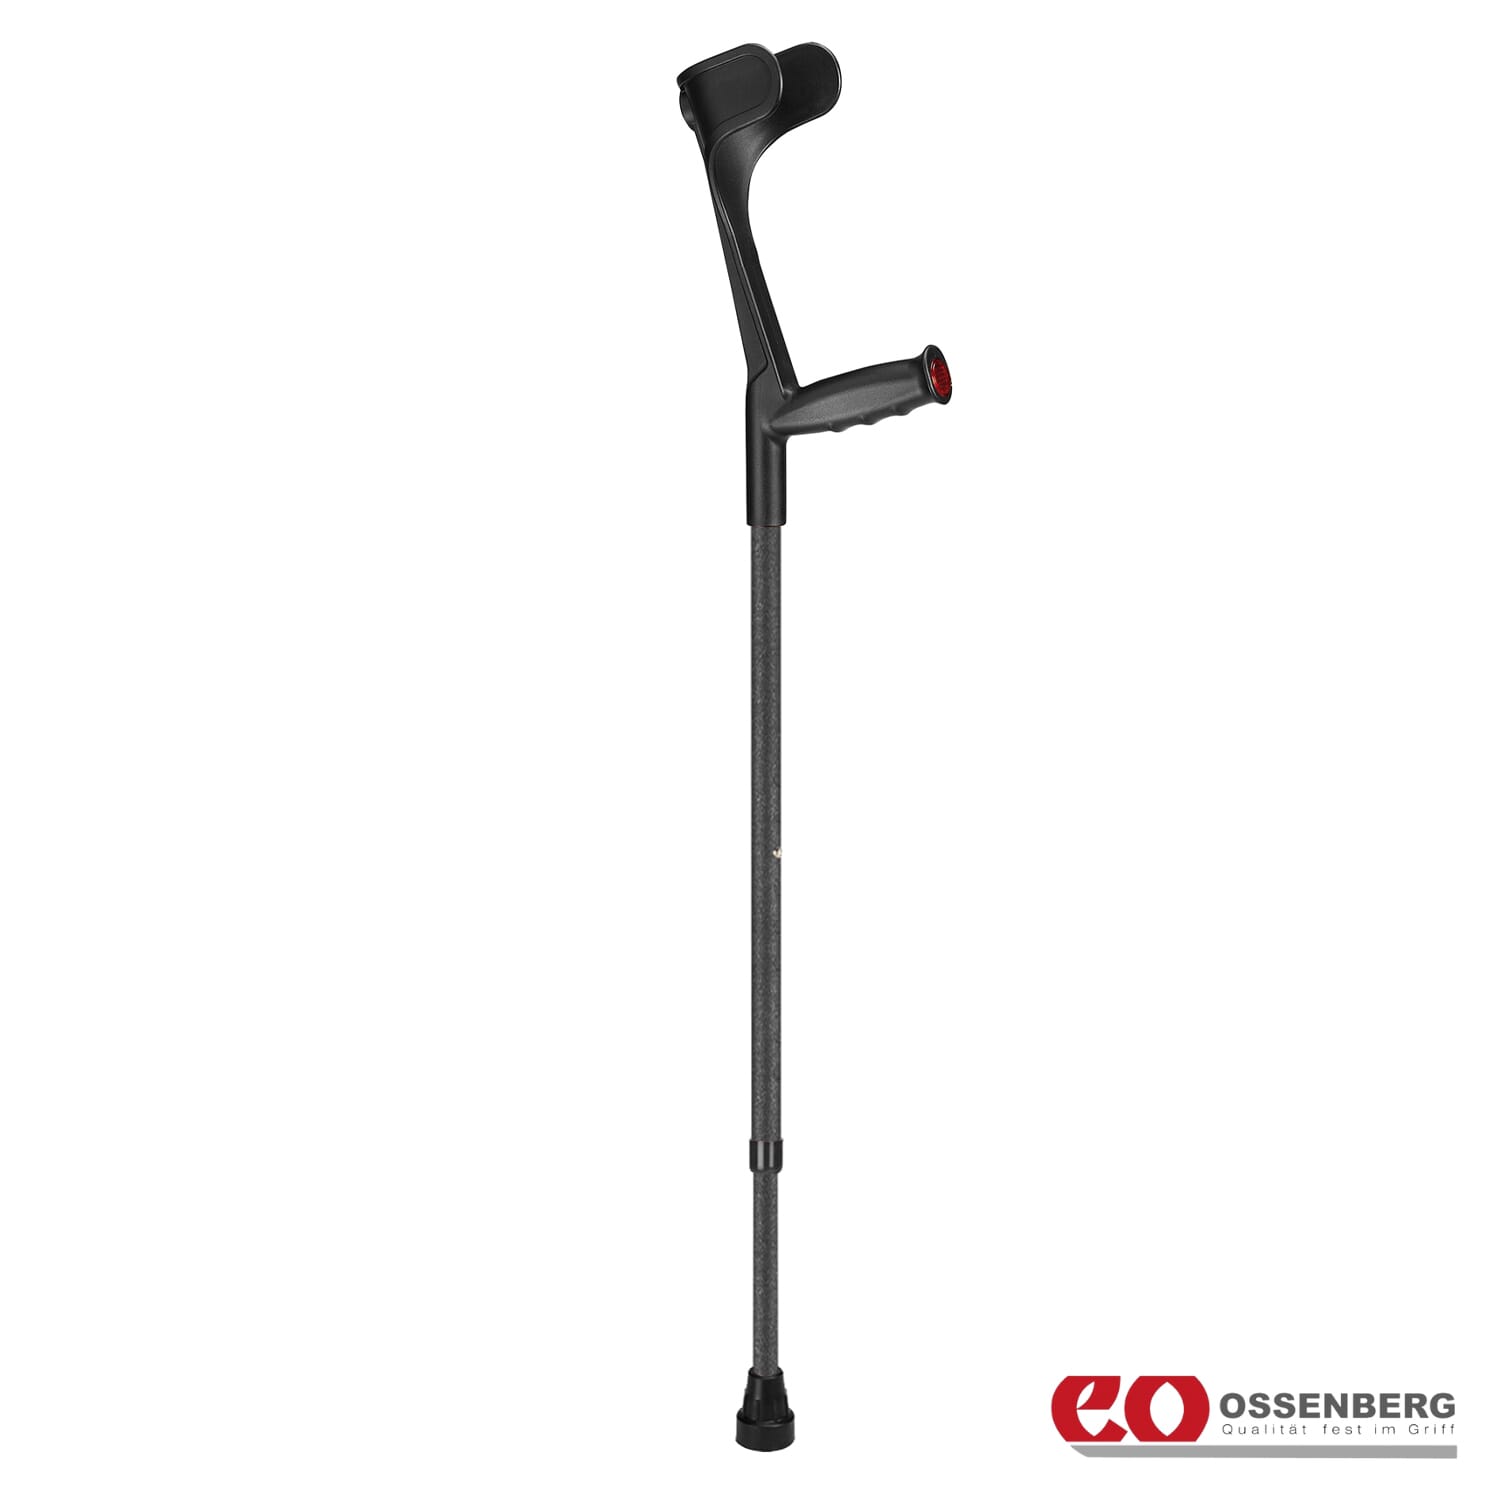 View Ossenberg Open Cuff Soft Grip Crutches Black Single information